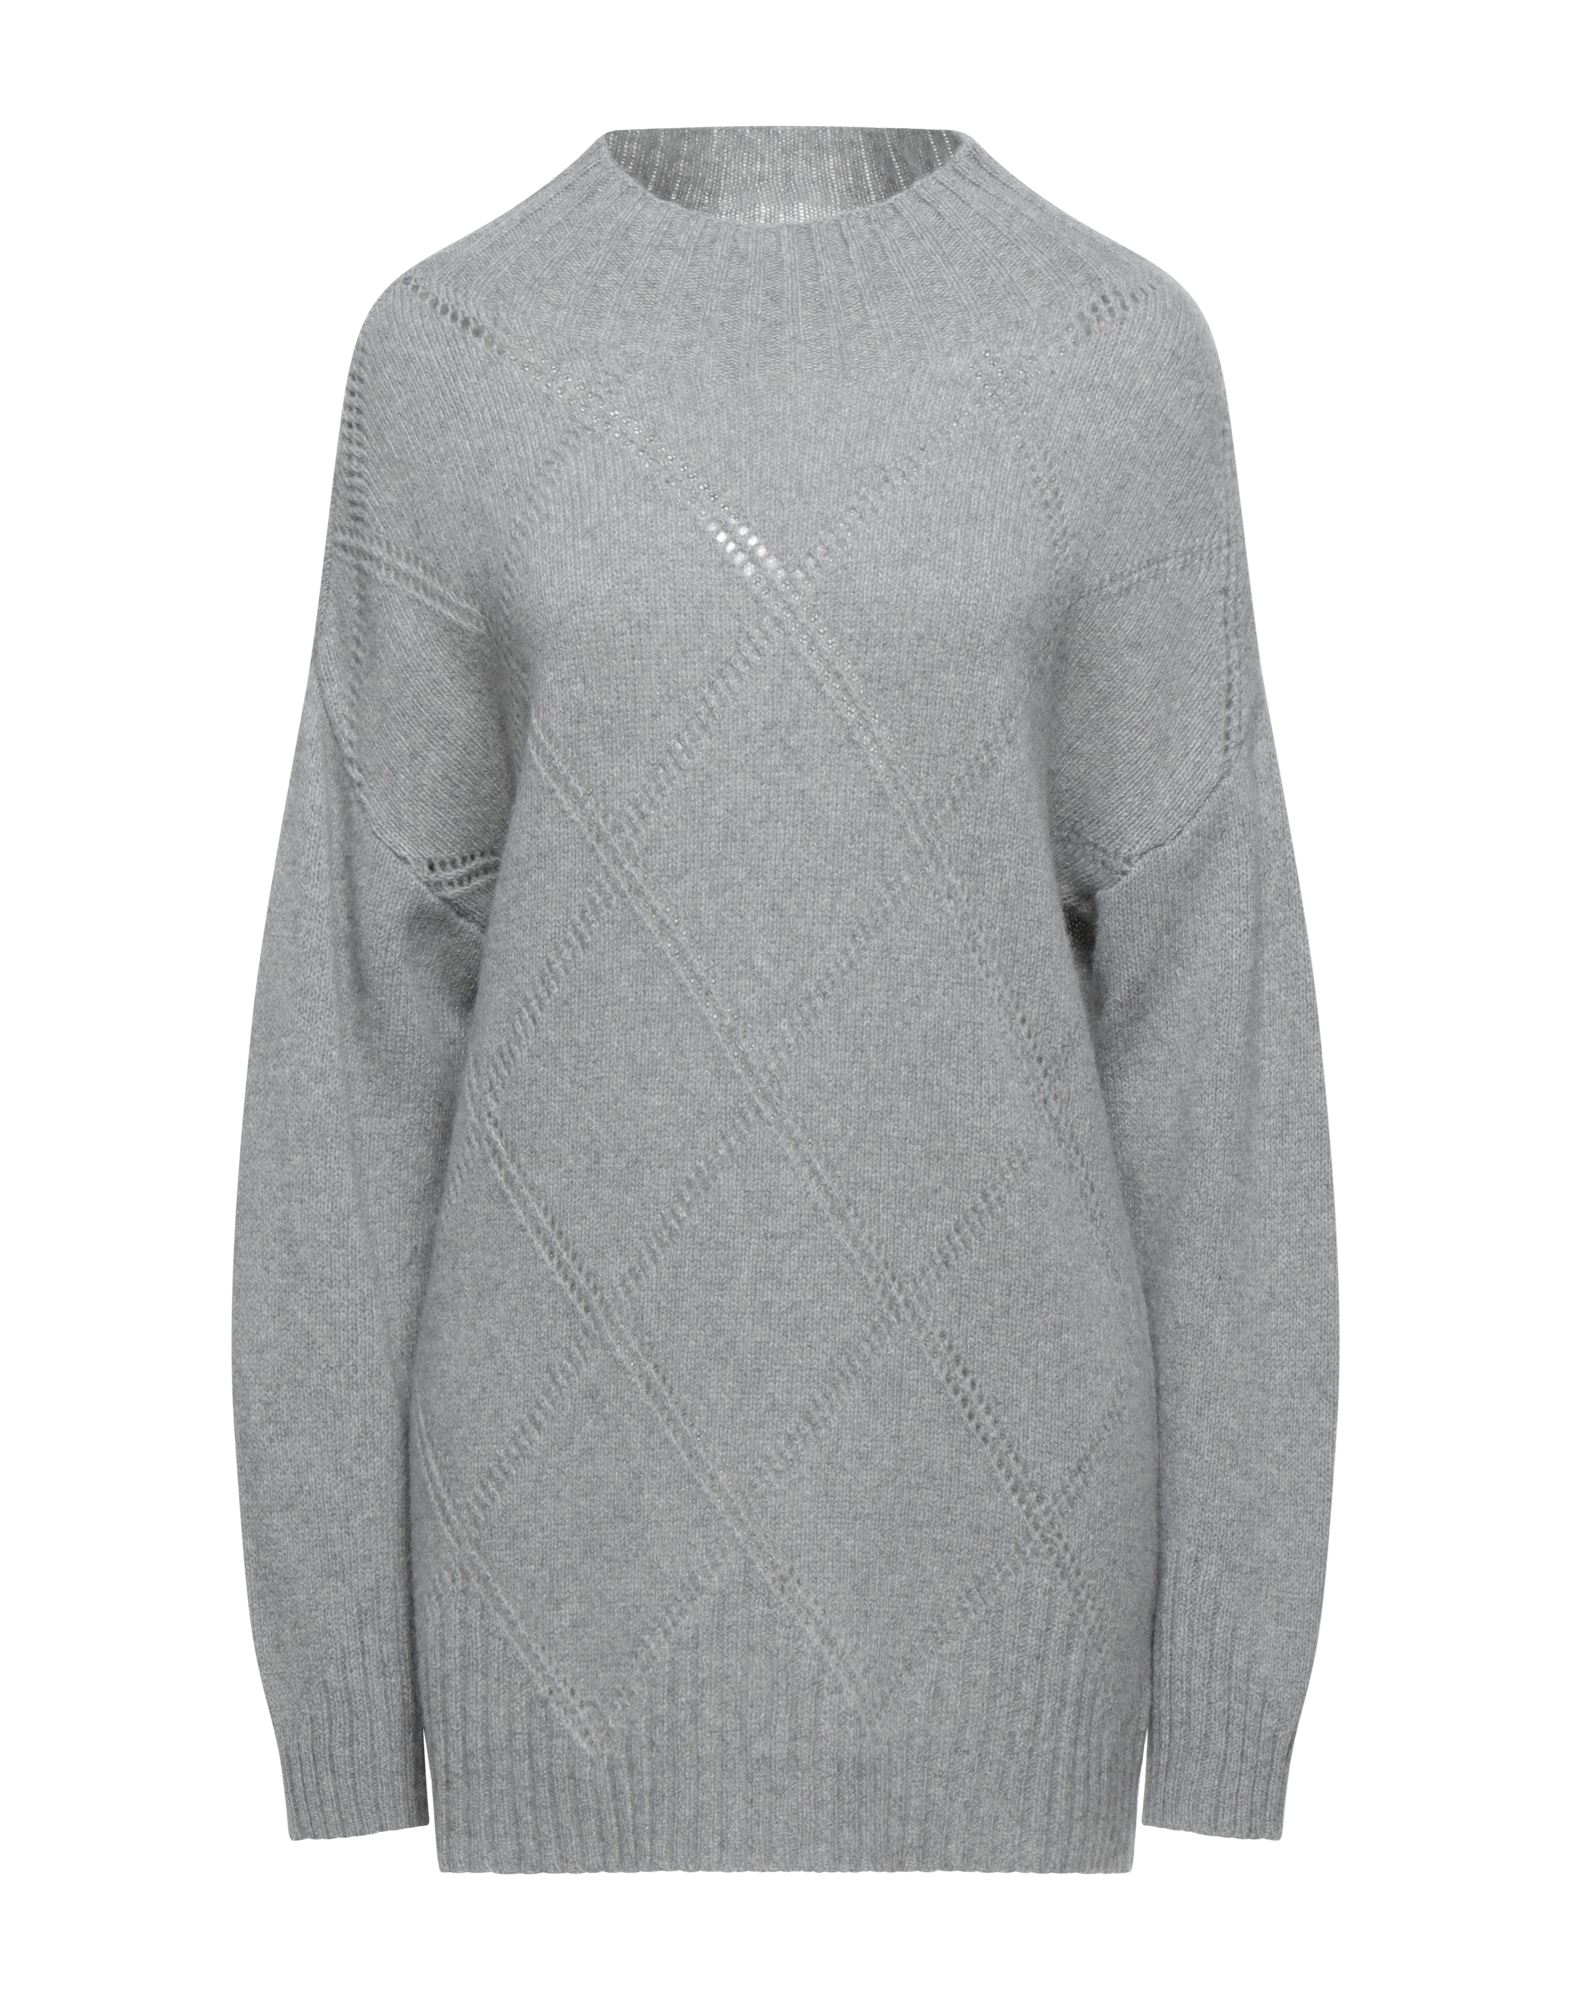 N.o.w. Andrea Rosati Cashmere Sweaters In Grey